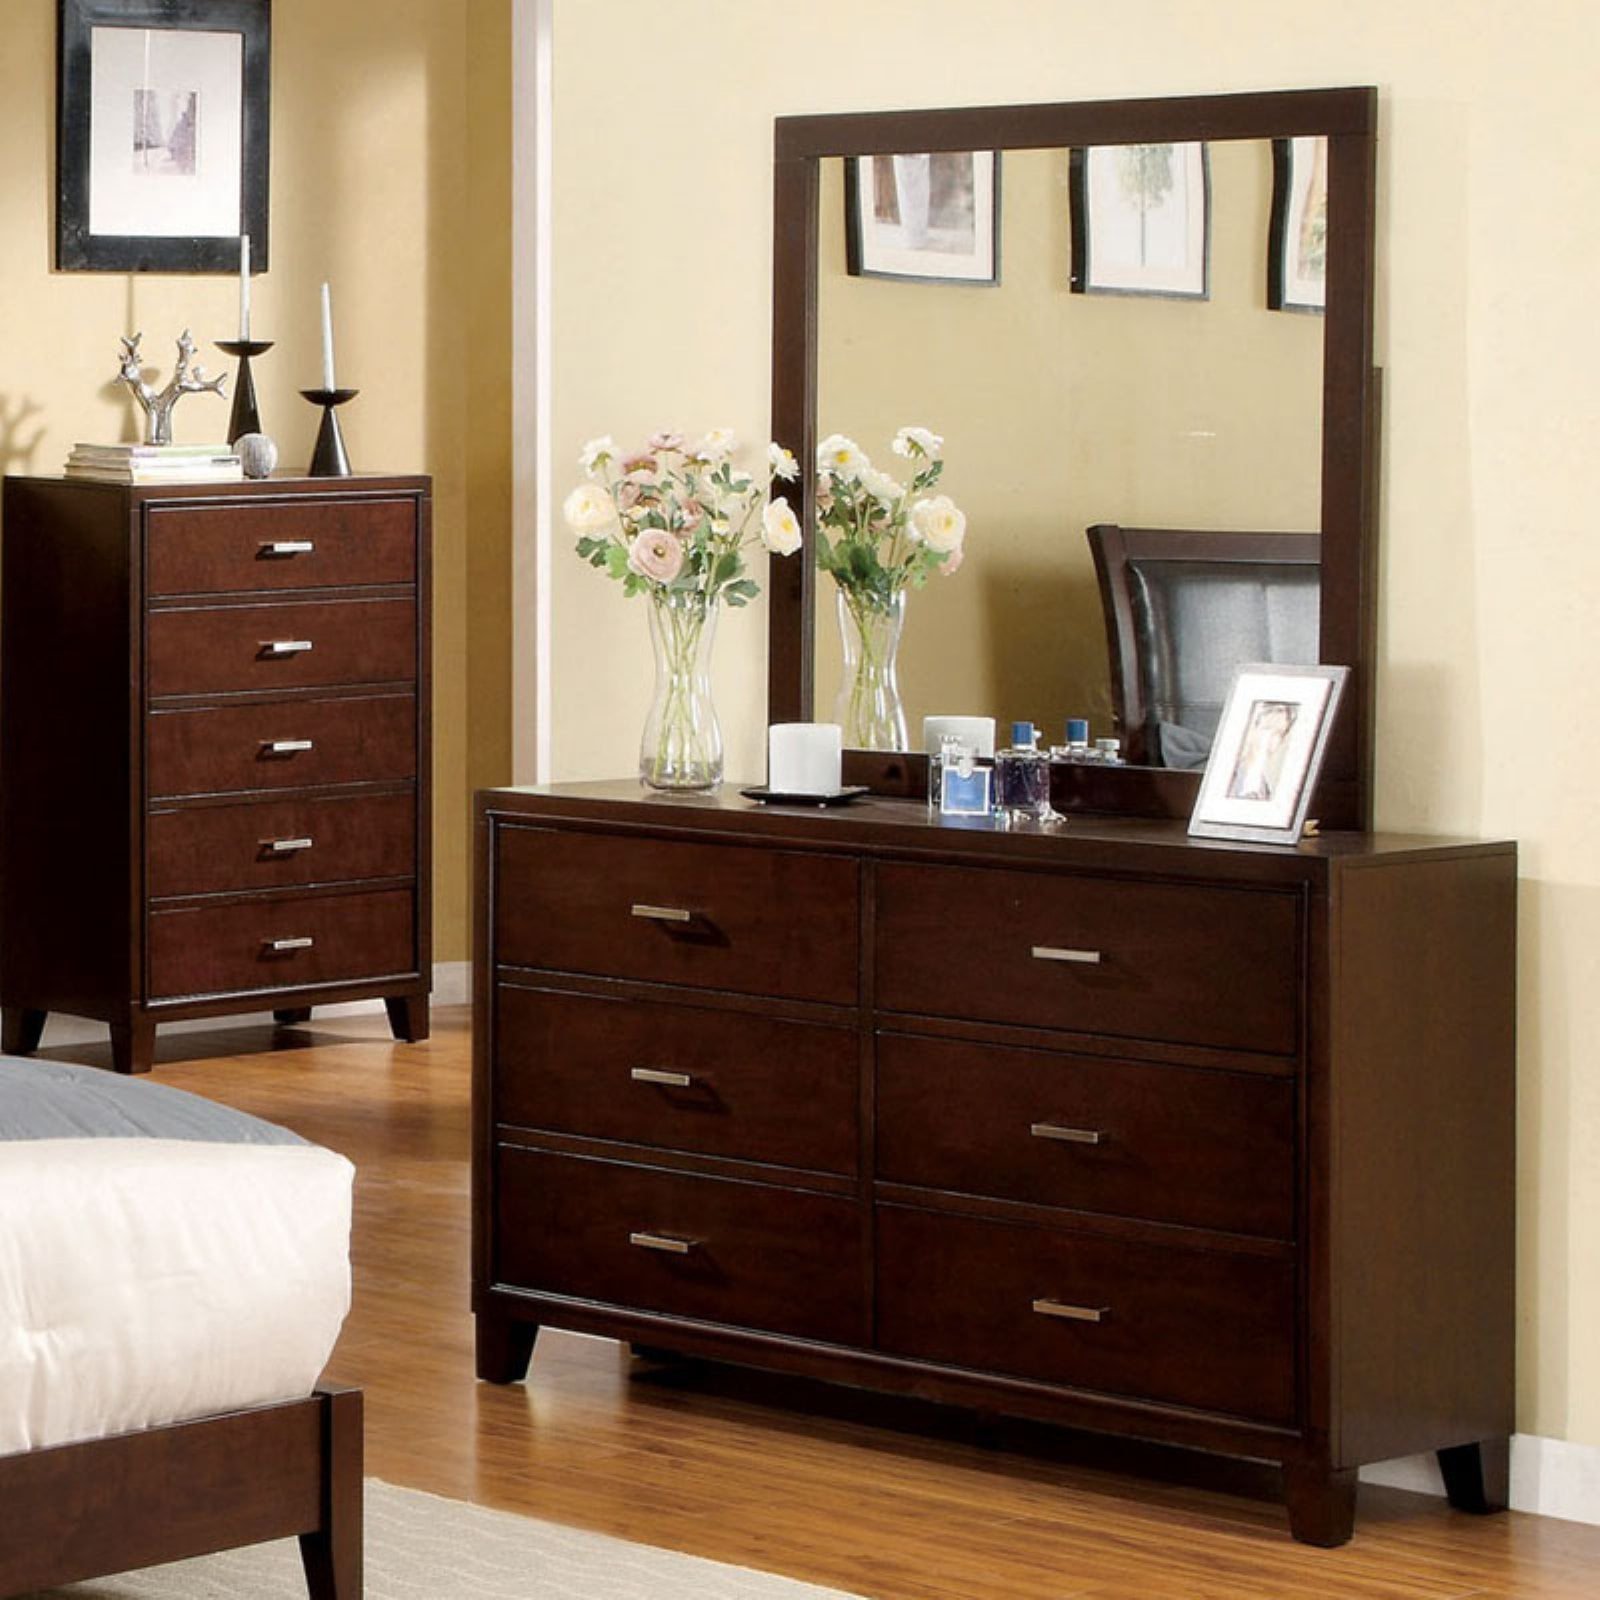 Furniture of America Enlarta 6 Drawer Dresser - Brown Cherry - Walmart.com